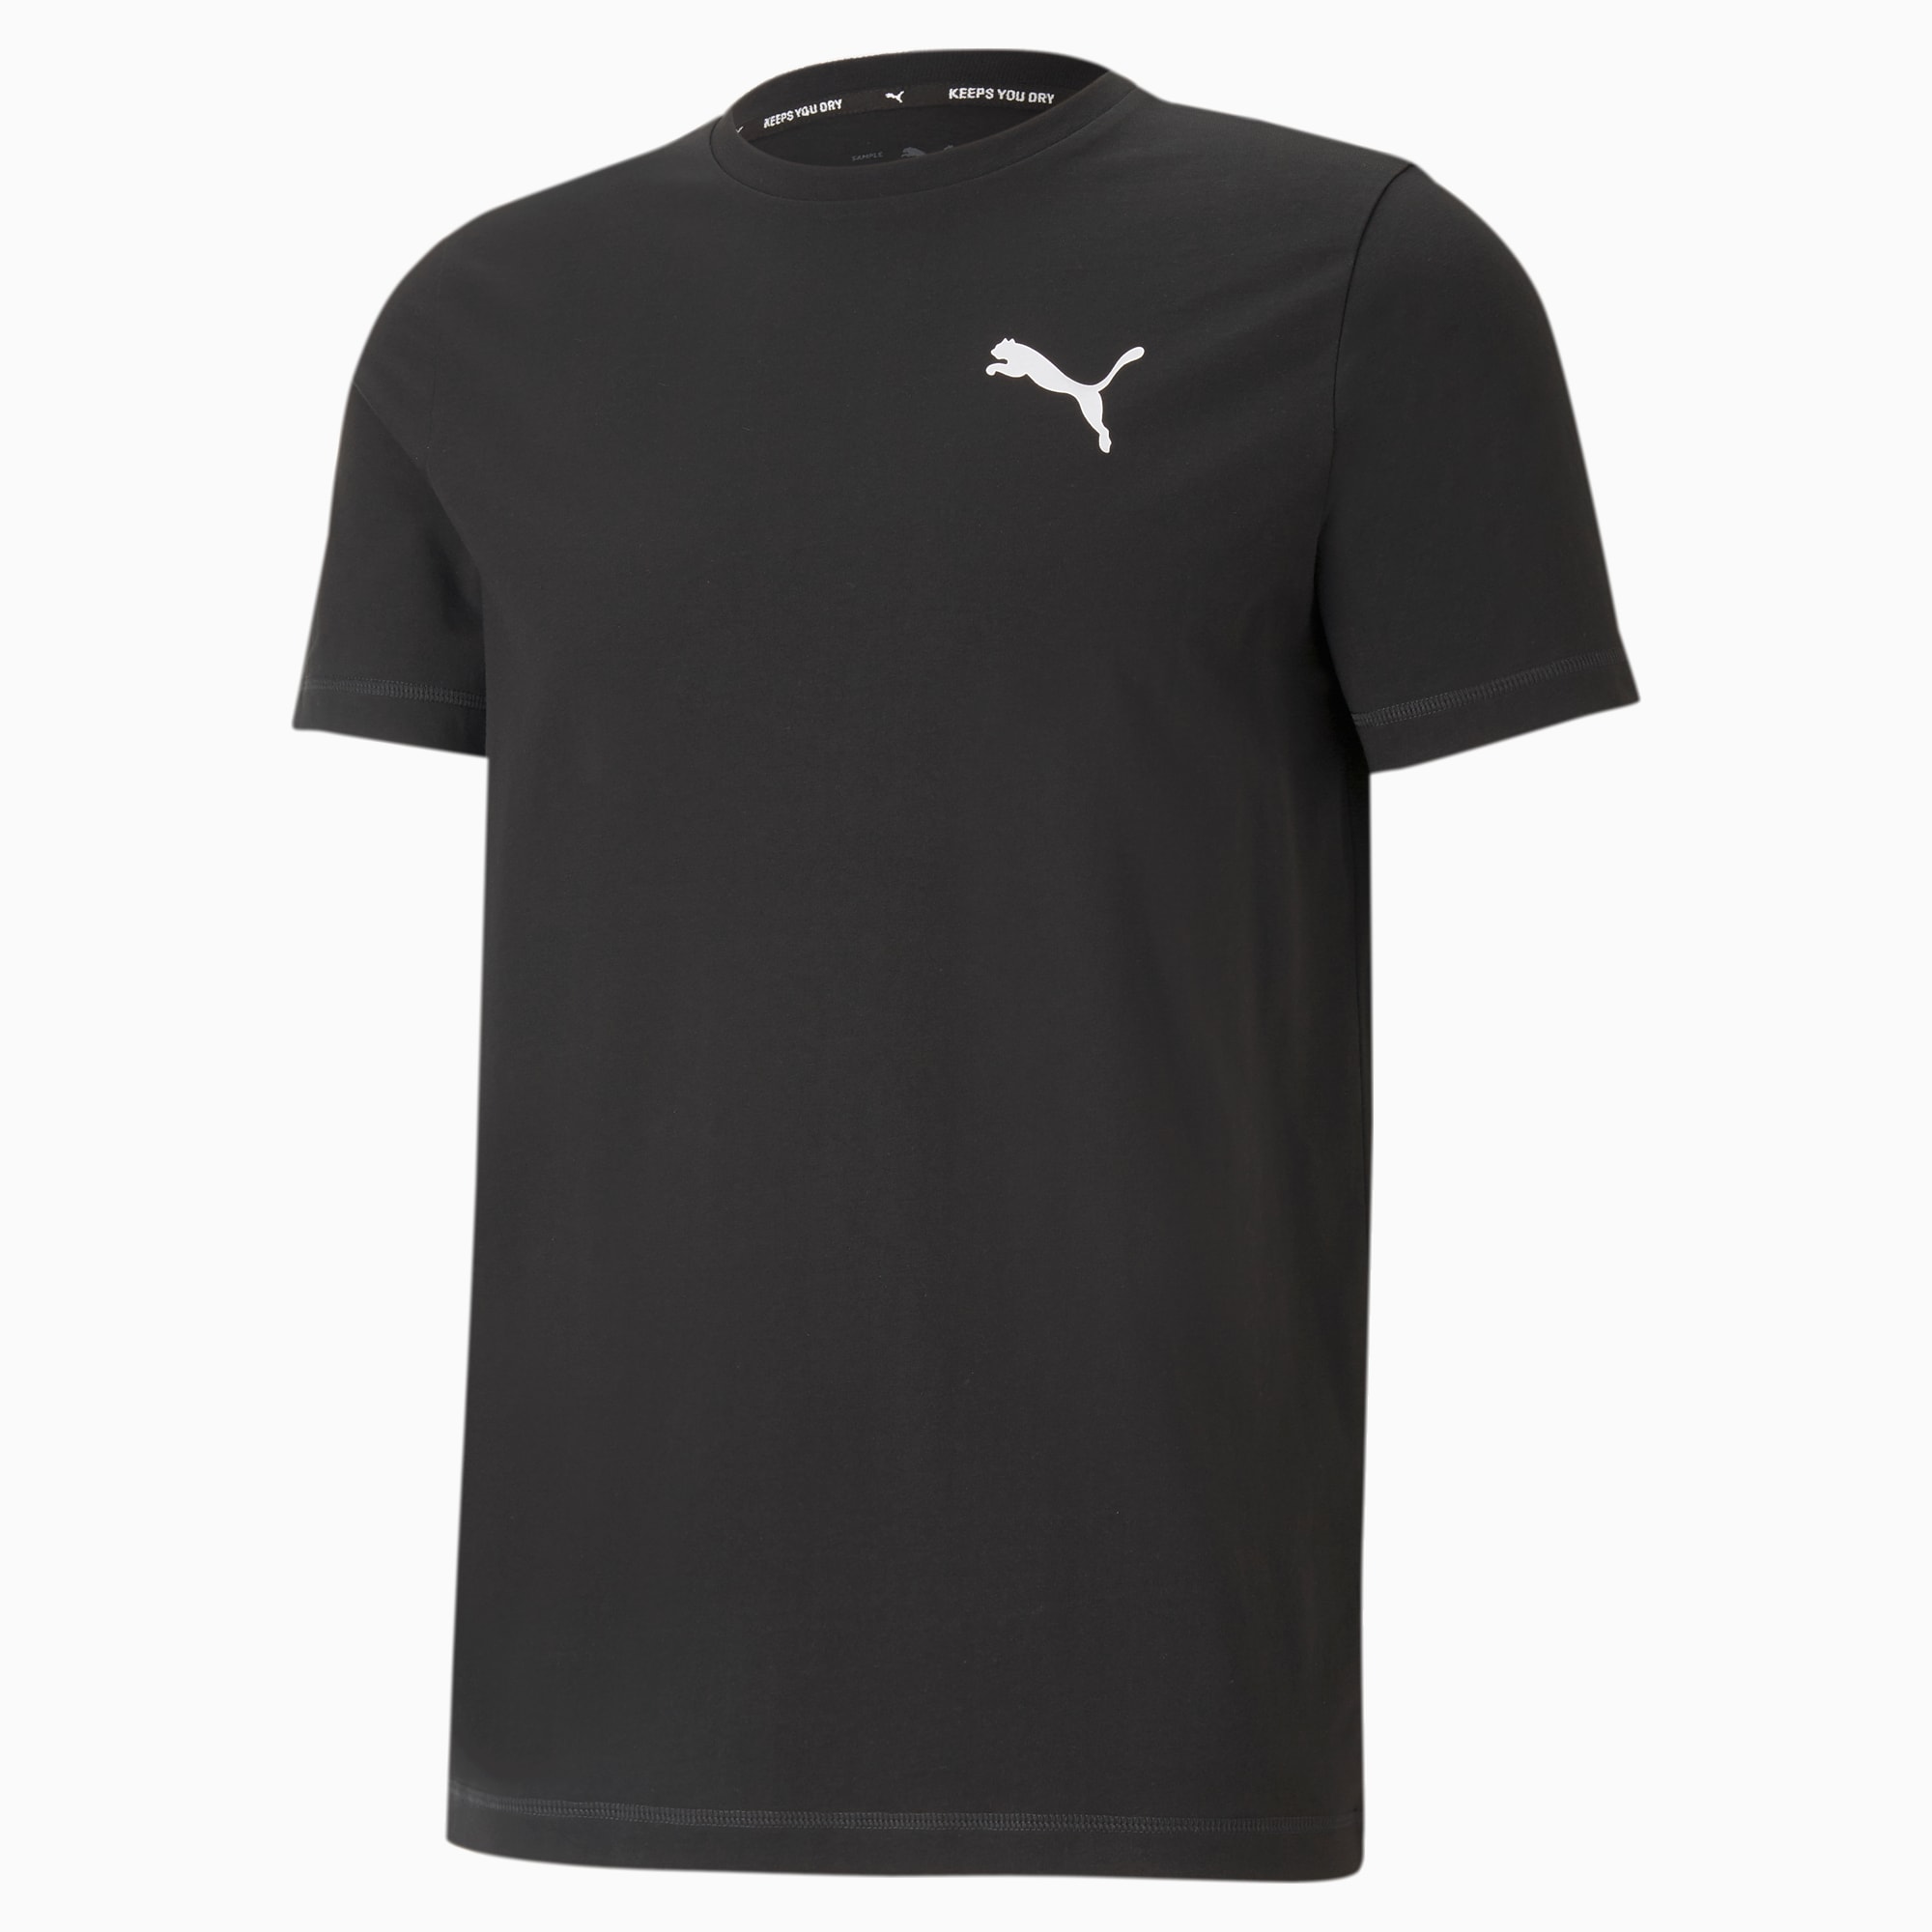 PUMA Active Soft Men's T-Shirt, Black, Size XS, Clothing